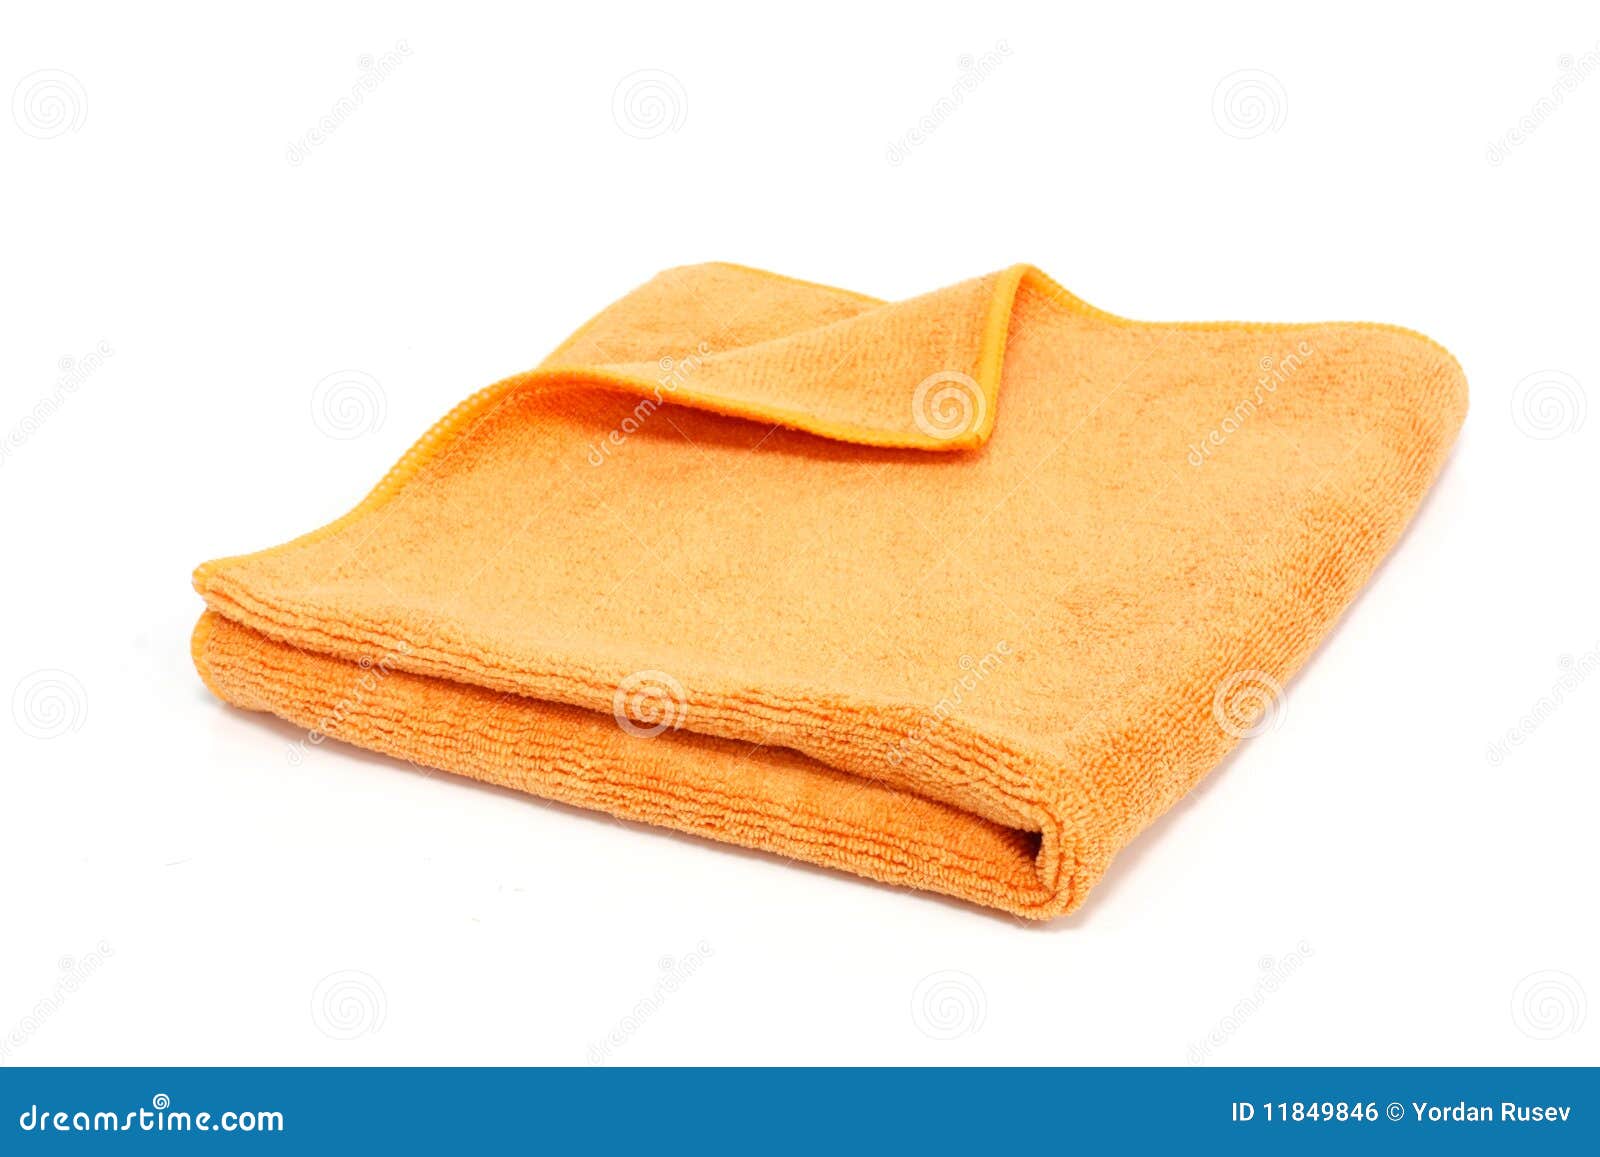 orange towel 